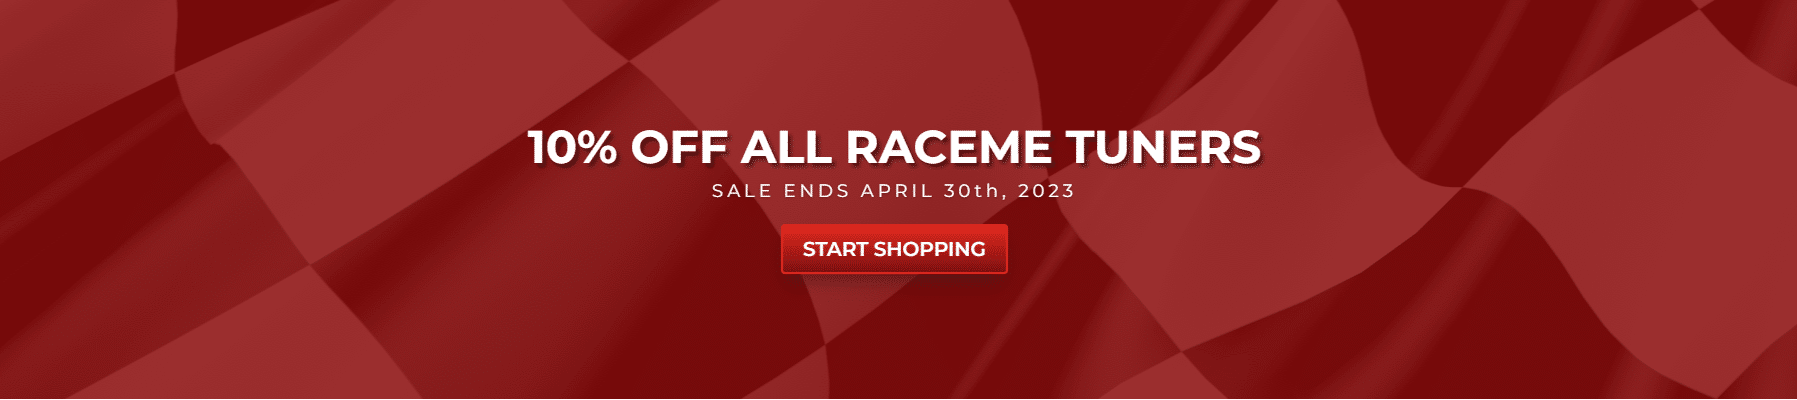 RaceMe Tuners On Sale